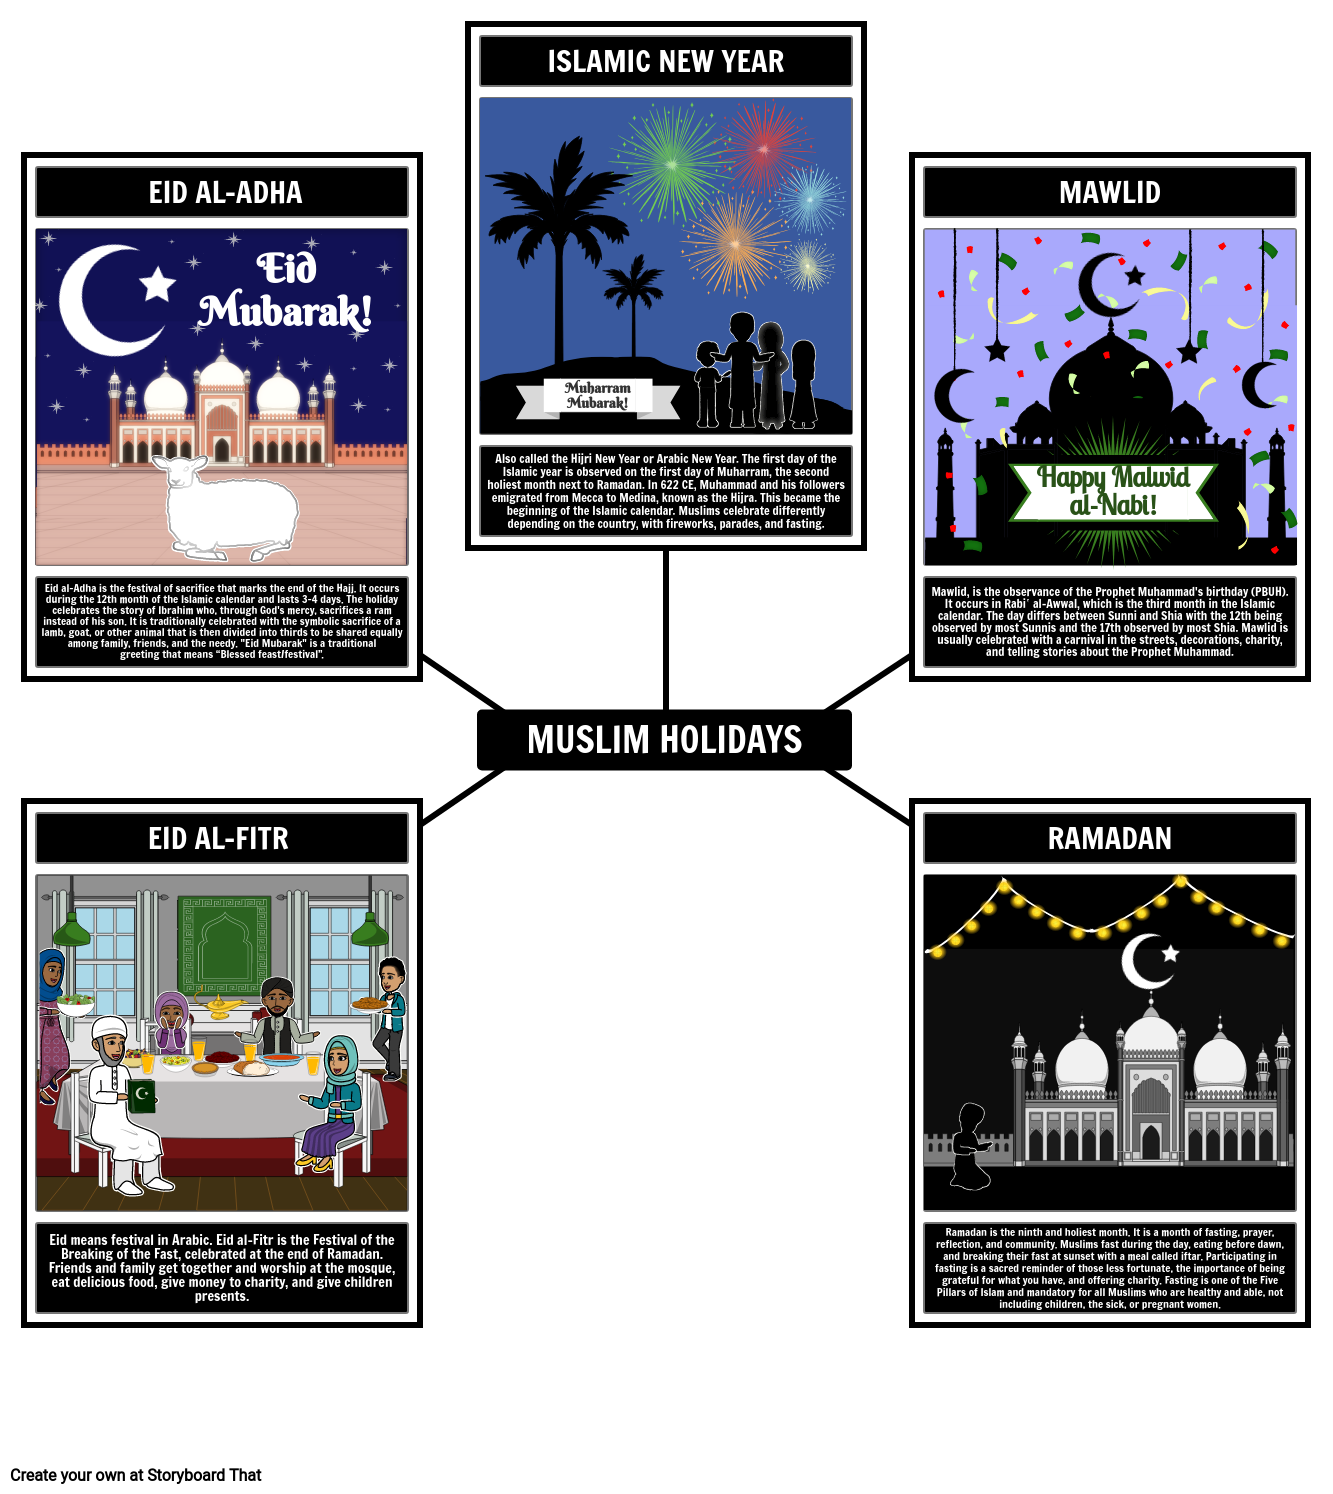 holidays-in-islam-muslim-holidays